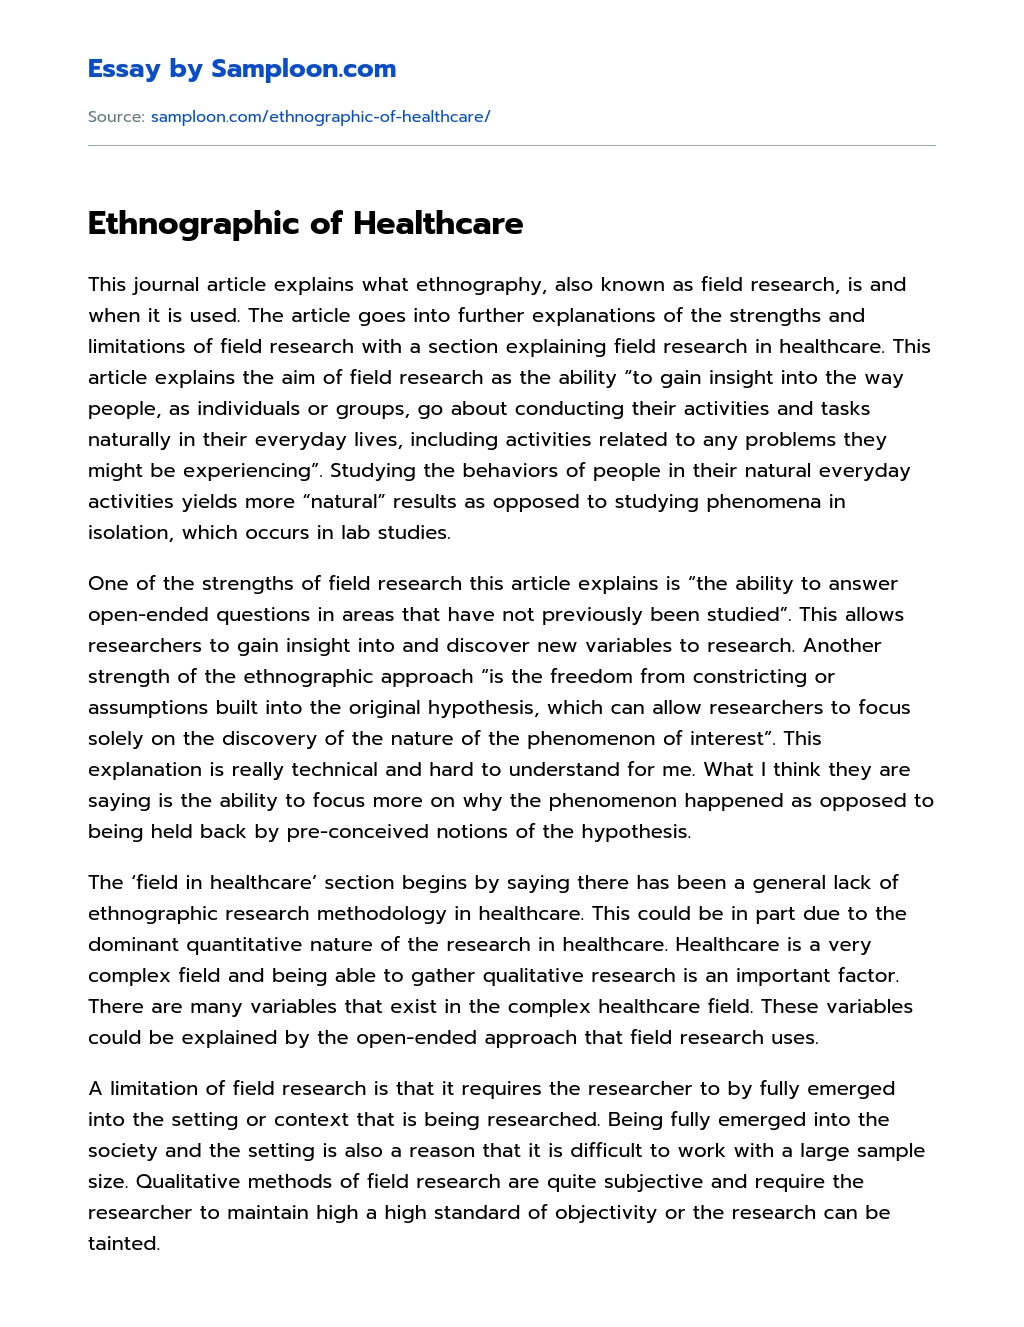 Ethnographic of Healthcare essay